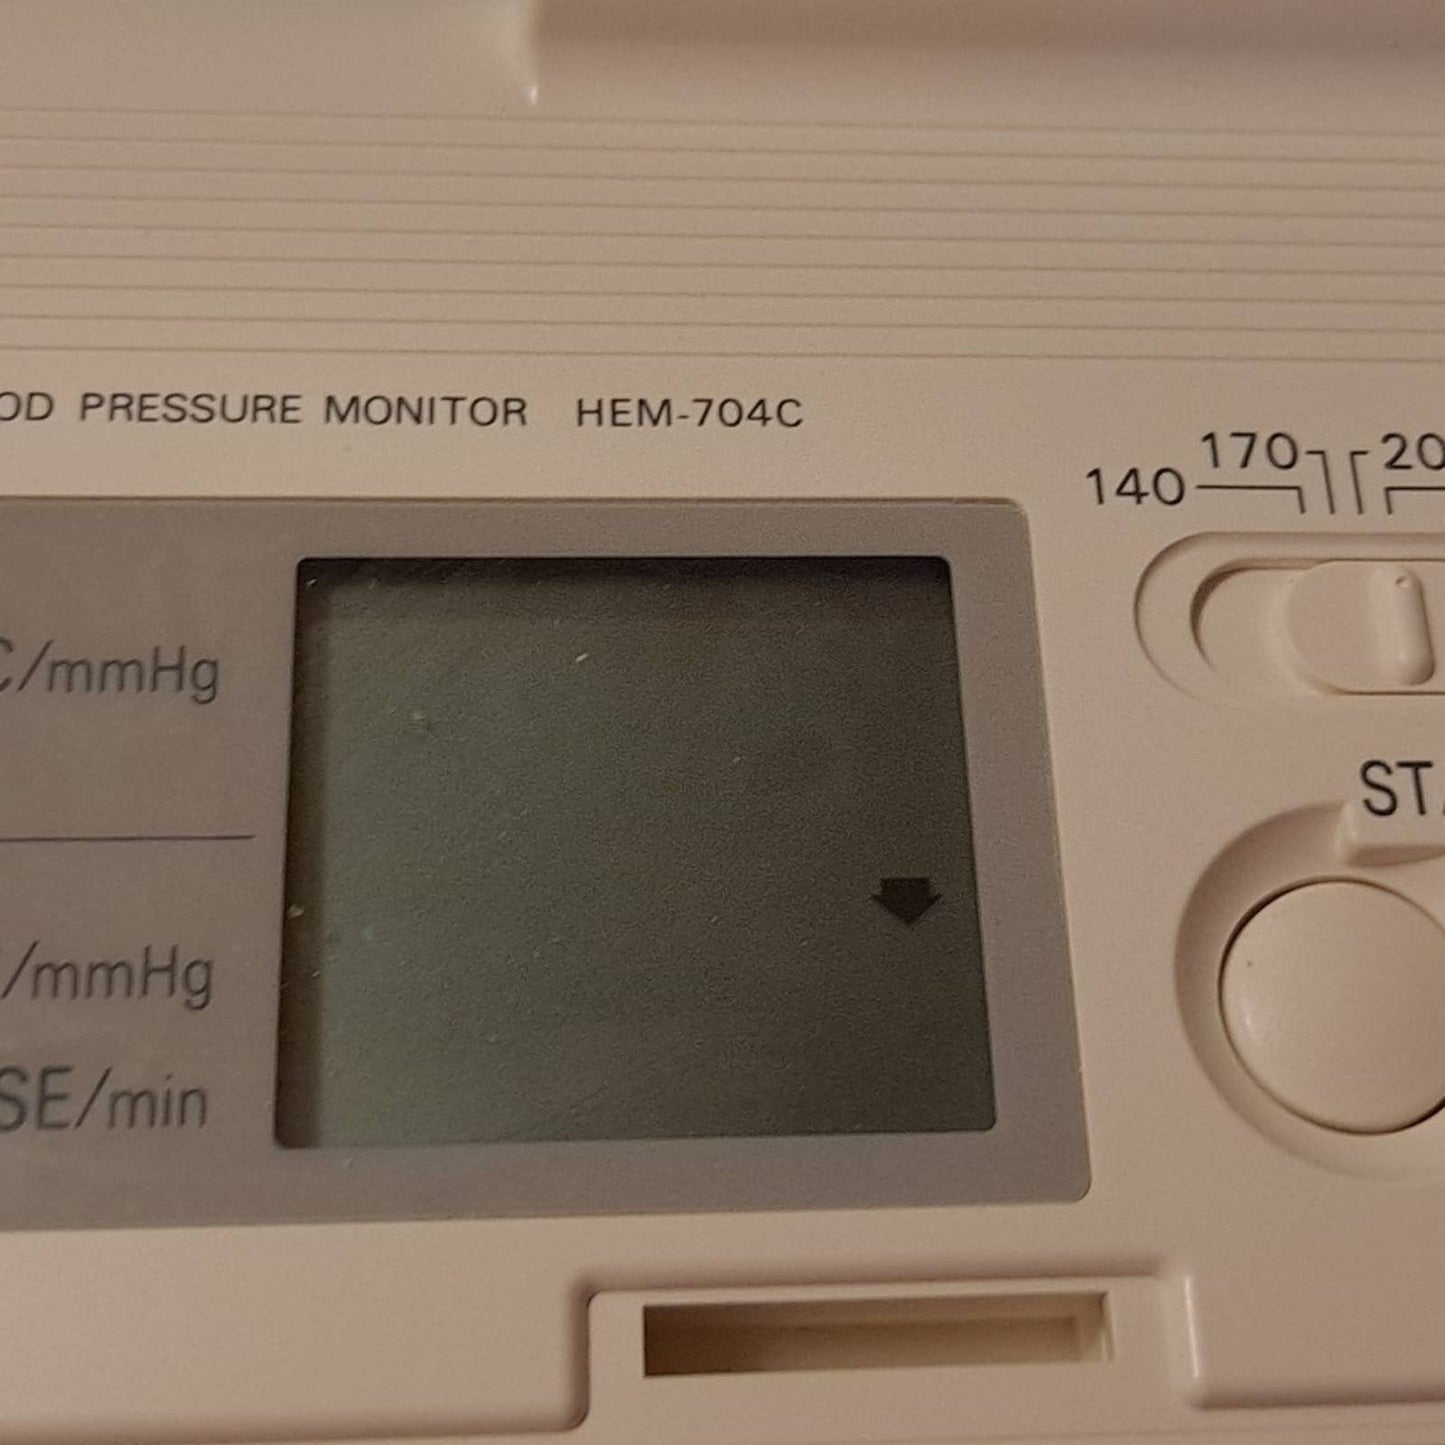 Automatic Oscillometric Digital Blood Pressure Monitor - tested